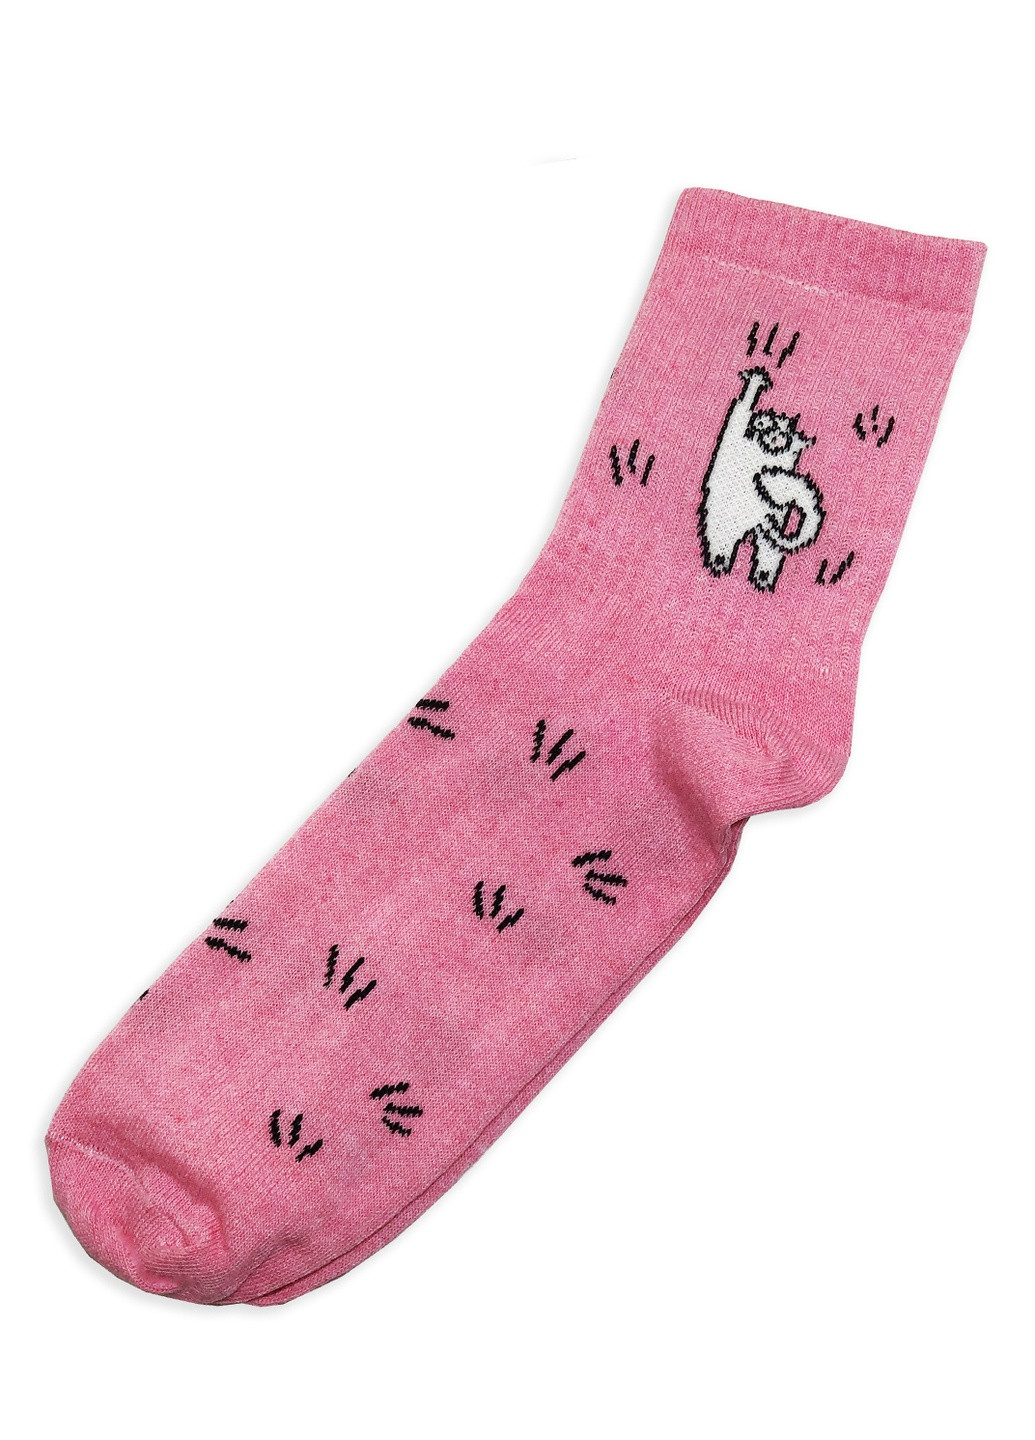 Шкарпетки Кот царапка Rock'n'socks высокие (211258832)